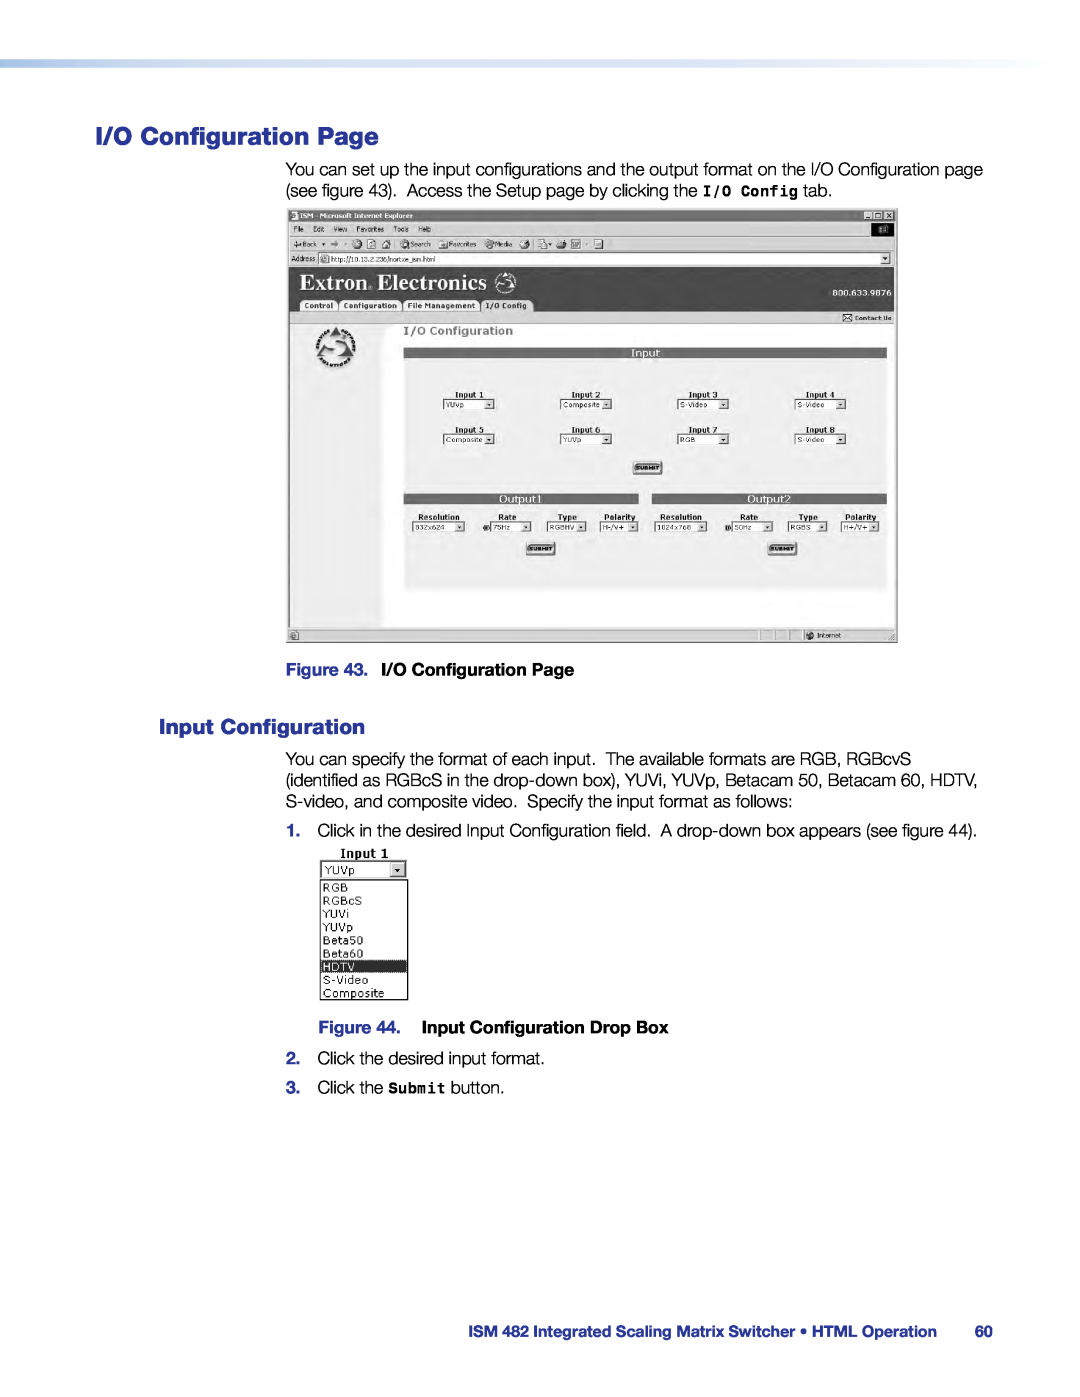 Extron electronic ISM 482 manual I/O Configuration Page, Input Configuration Drop Box 